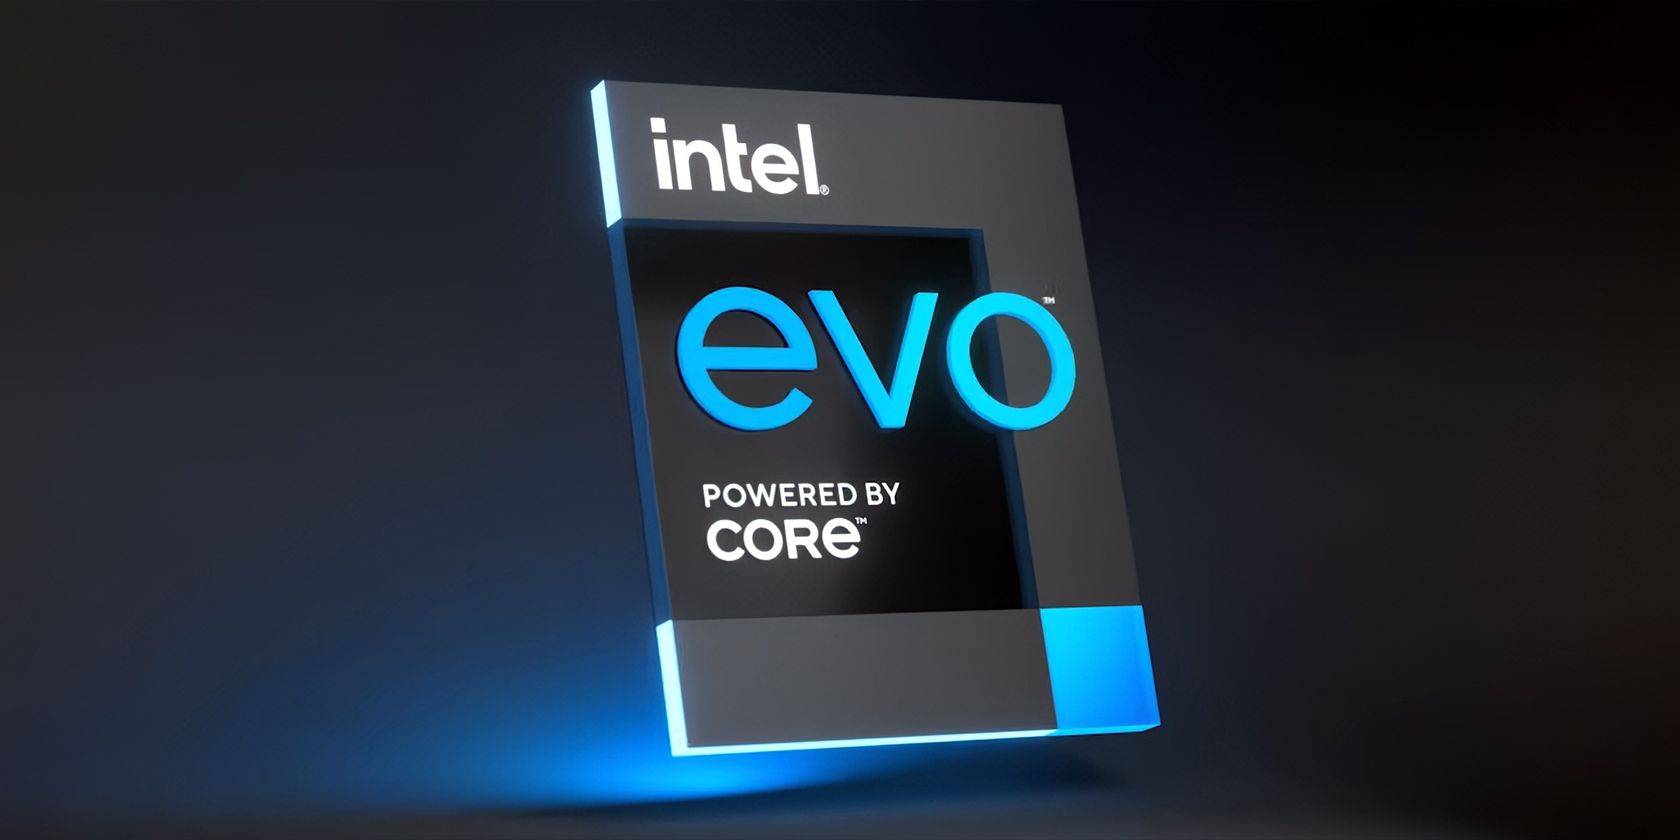 Intel Evo logo from YouTube